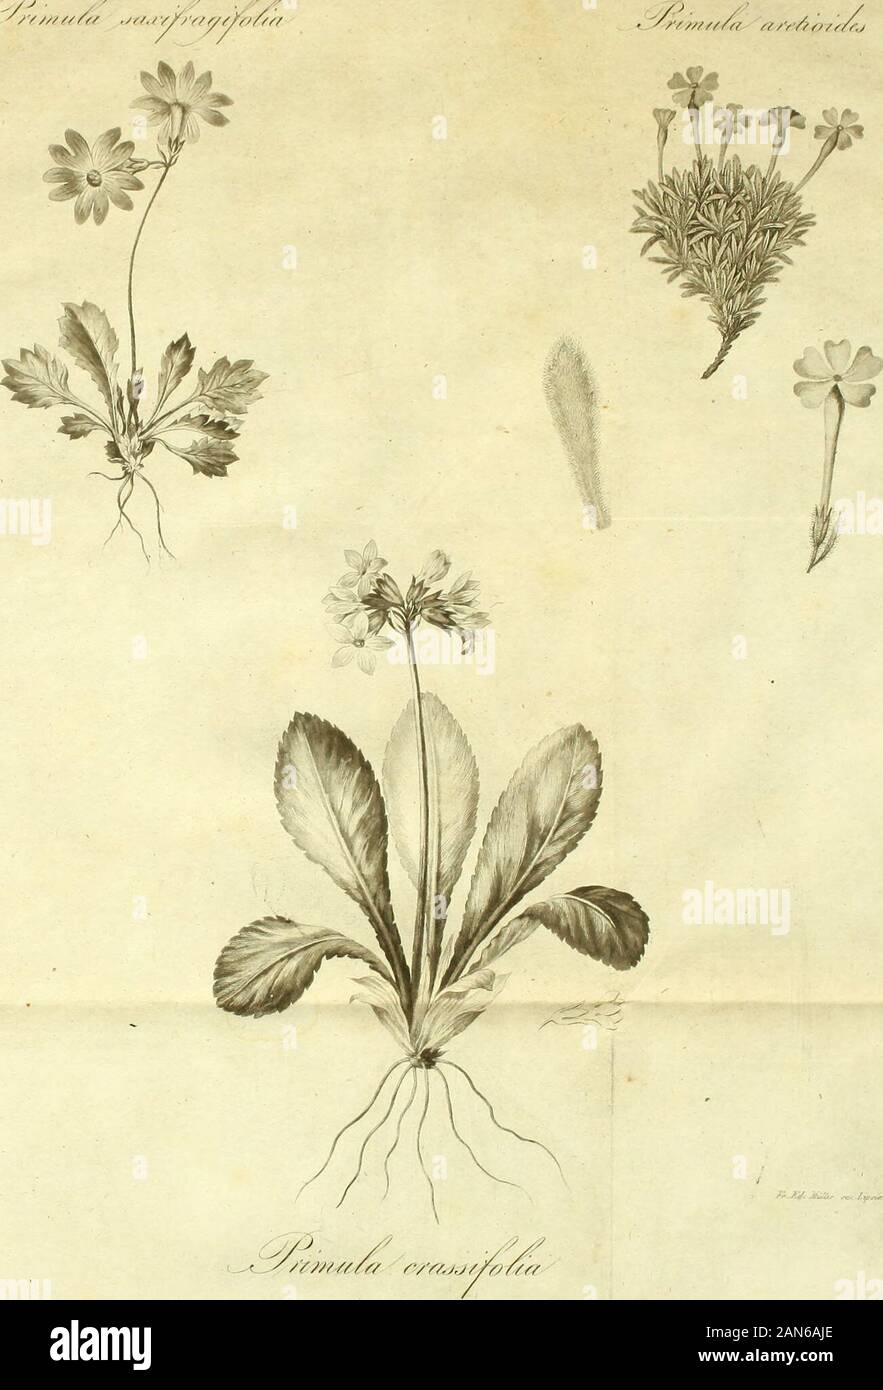 Monographia generis primvlarvmCum tabulis aeneis IX . I /?r&mit/a /////////,/./. /,W,/Y INDEX SPECIERU M. Primula acaulis. Jacq. — algicla. Adam. — Allionii. Loiseleur* — altaica. — amoena. Bieeerst.»— arctioides. — auricula. Linn. — auricula. VilL. — auriculatat LaM. — Balbisii. — calycanlha. Retz^ — carniolica. Jacq. — ciliata. Sciibank:. — Columnac. Tenore. — Cortusoules. Linn. — crassifolia. — crenata. Lam. &gt;— clavurica. Spheng. — dentijiora. AndkeW. — egalliccen?i-s. — elatior. Jacq. — exaliata. ?—» farinosa. Linn. — fuimarchica. JacQ. No. V. XXIX. XXXVIII. XXI. IX. XLII. X. XIV. XVI. Stock Photo